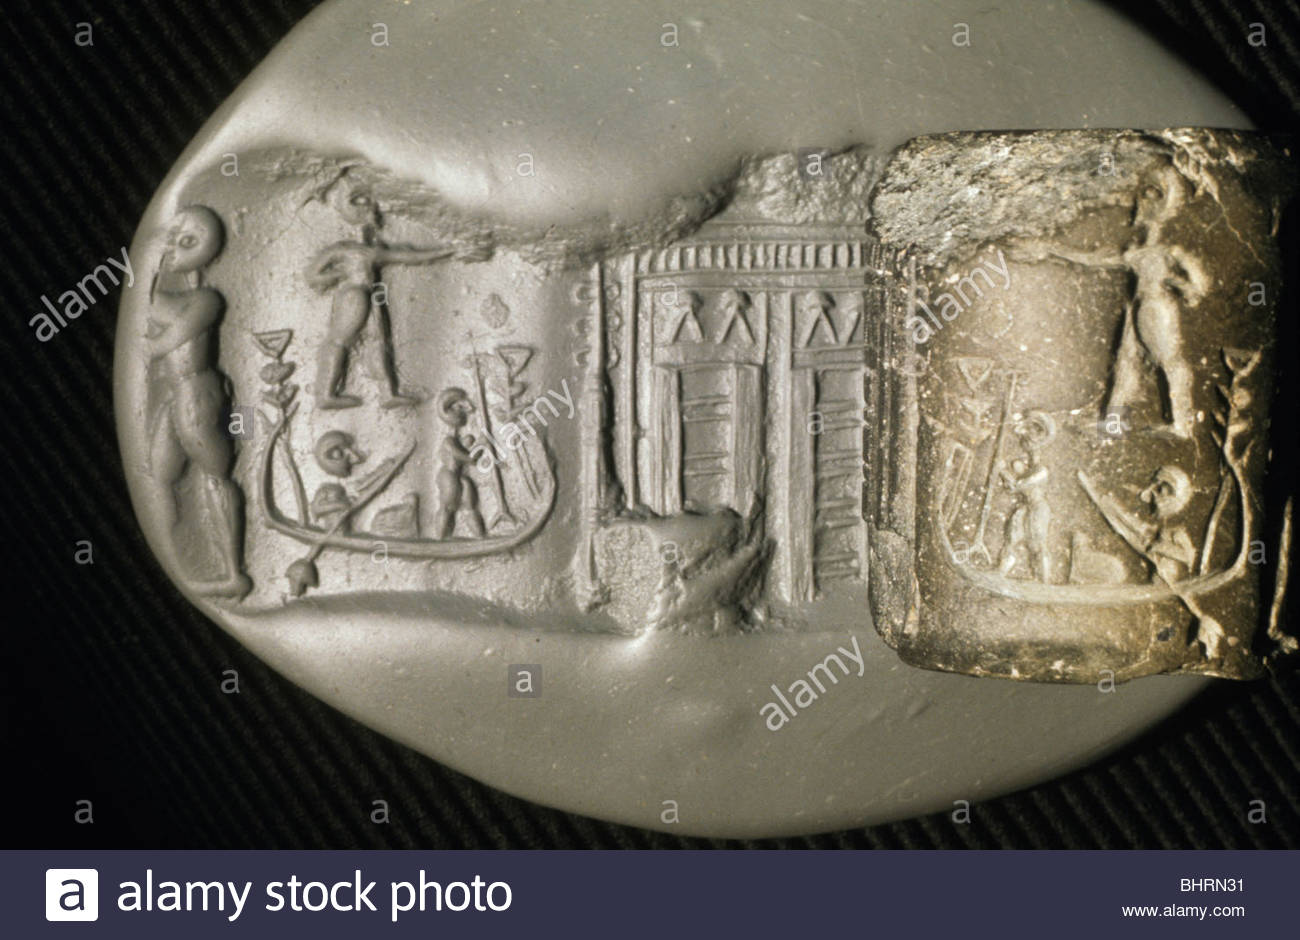 Enki's temple residence on the water's edge, Sumerian cylinder seal from Eridu shows Enki's doorway, artifact in British museum